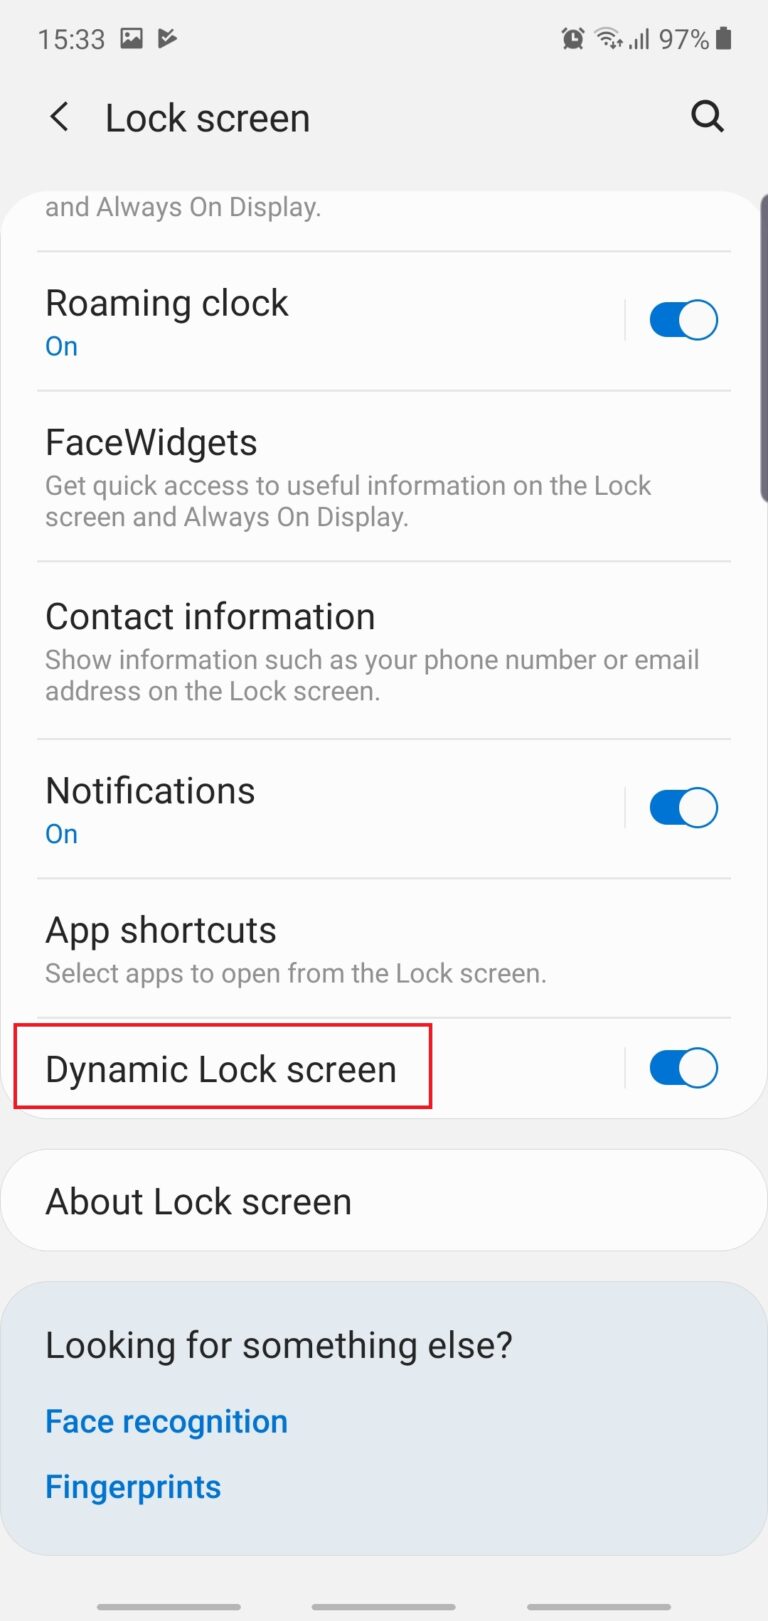 dynamic lock screen